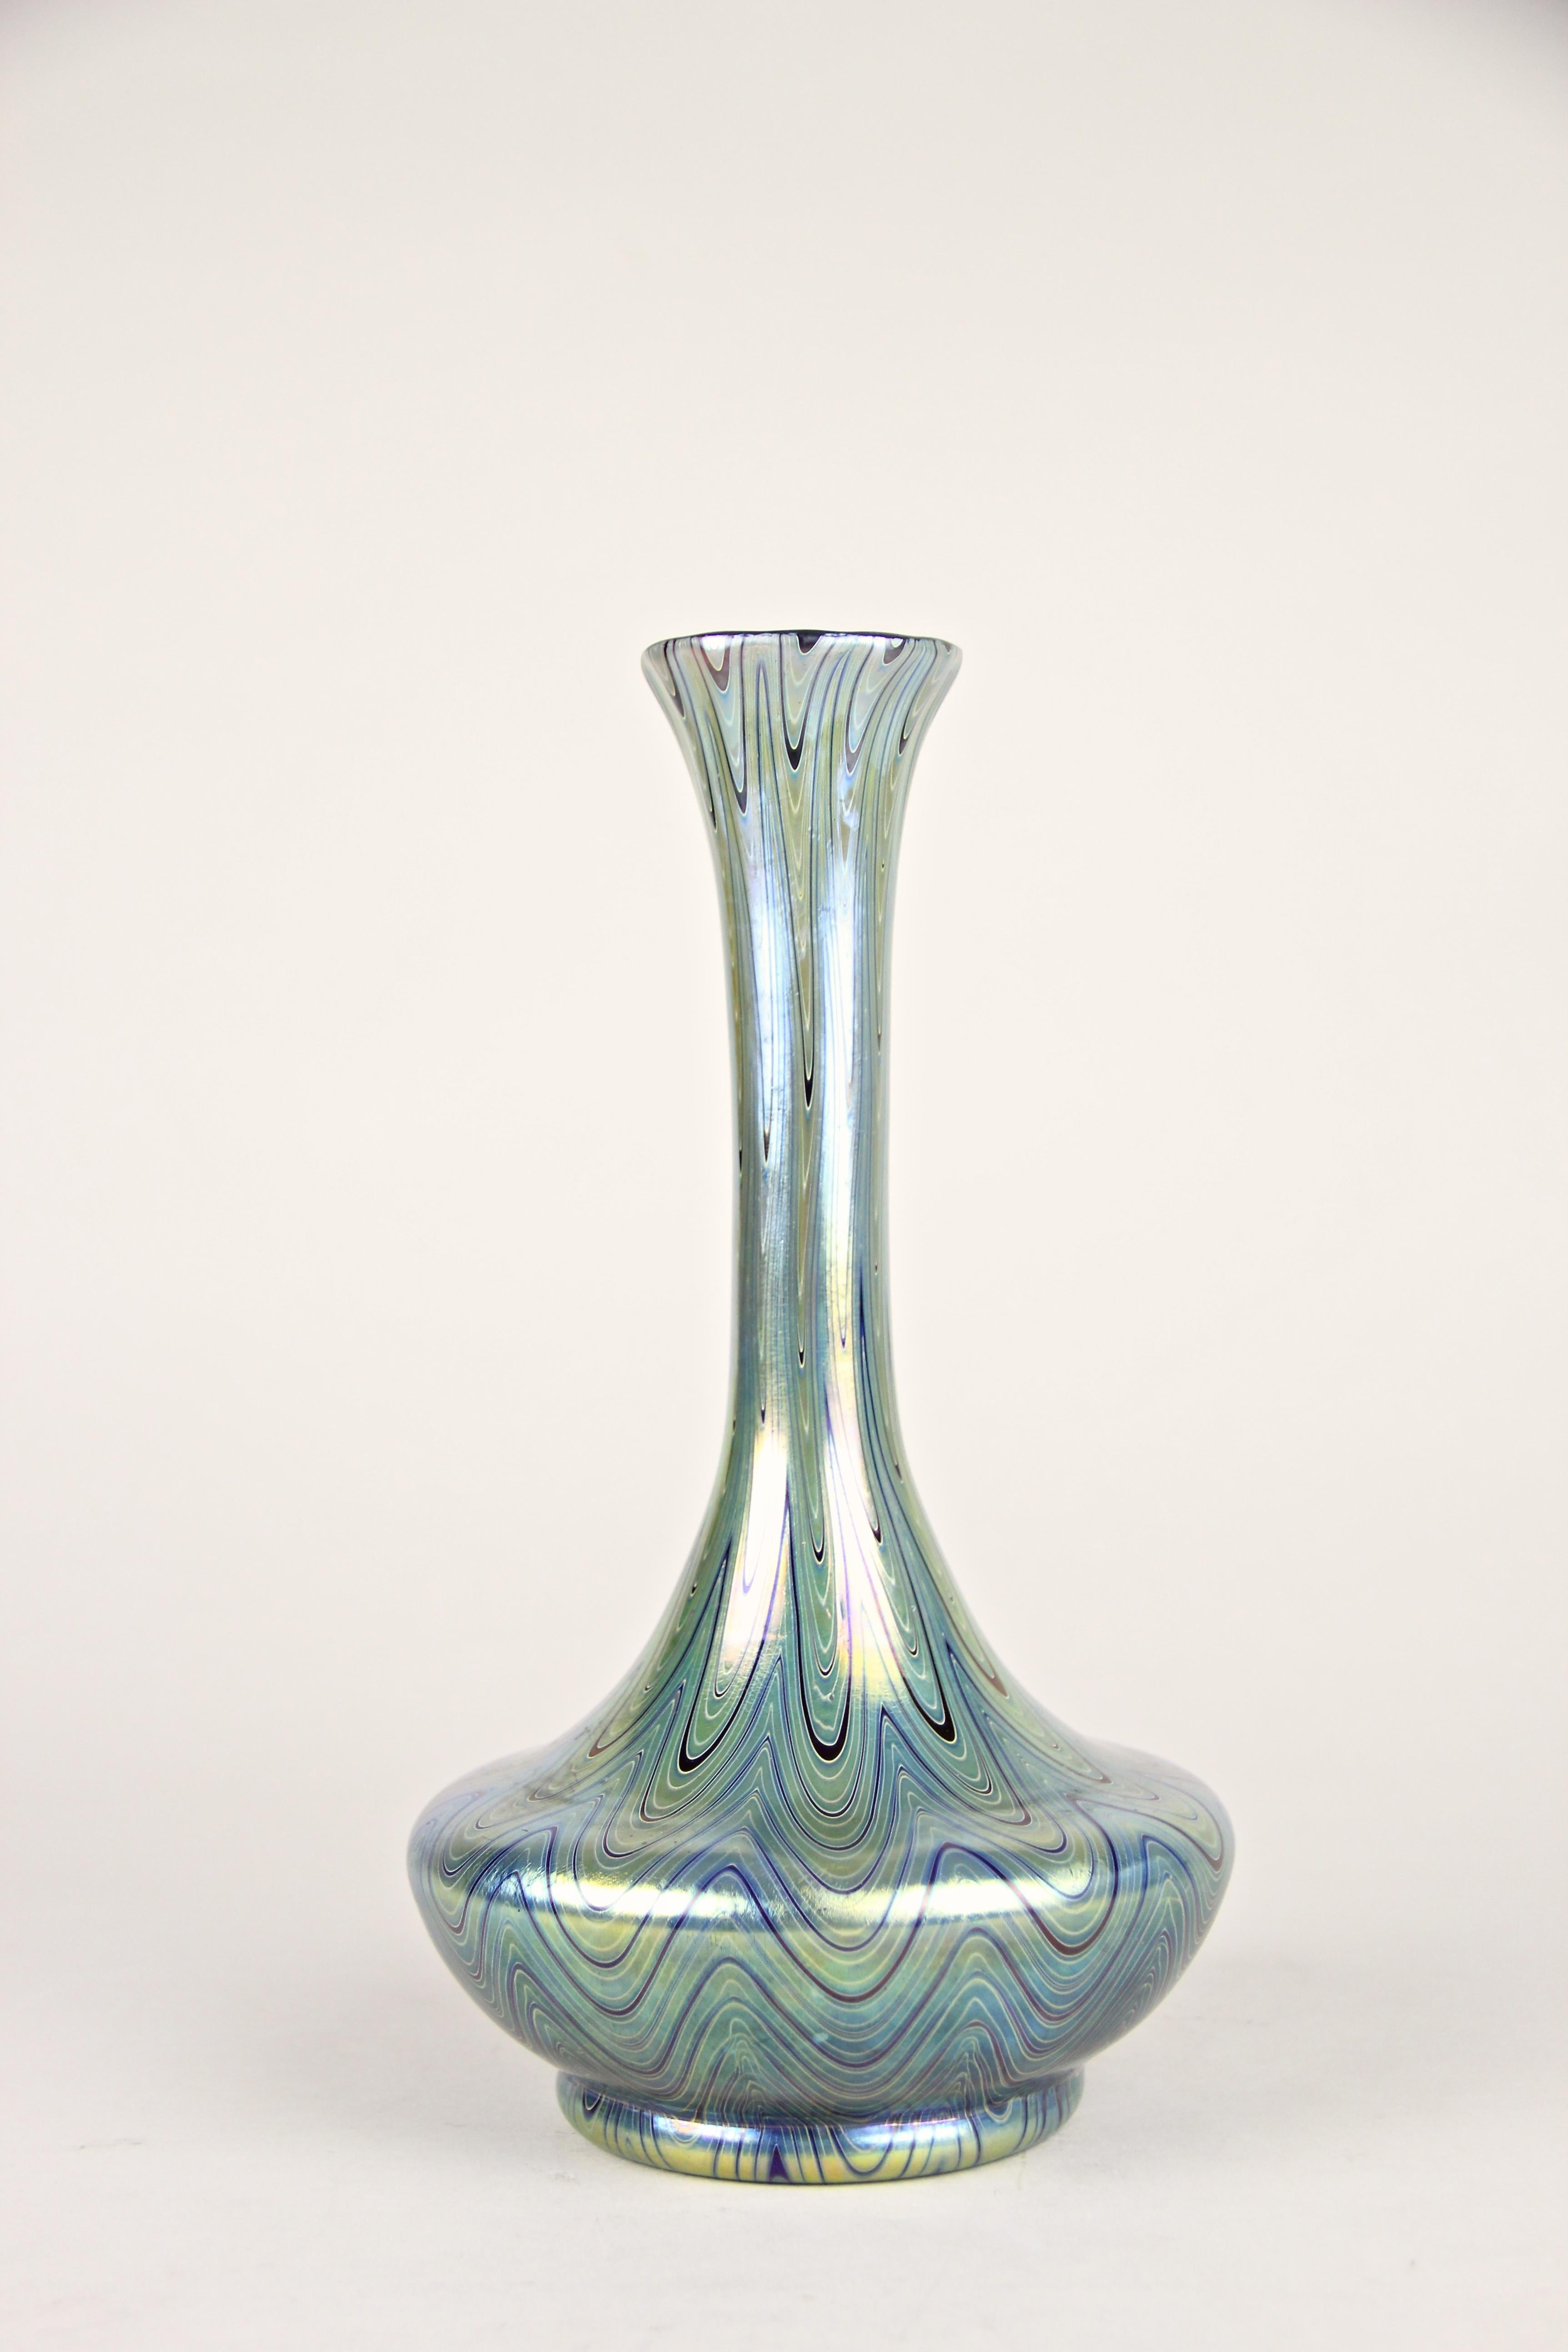 Art nouveau Vase en verre Loetz Glass Rubin Phänomen Genre 6893 Iriscident, Bohemia, vers 1899 en vente